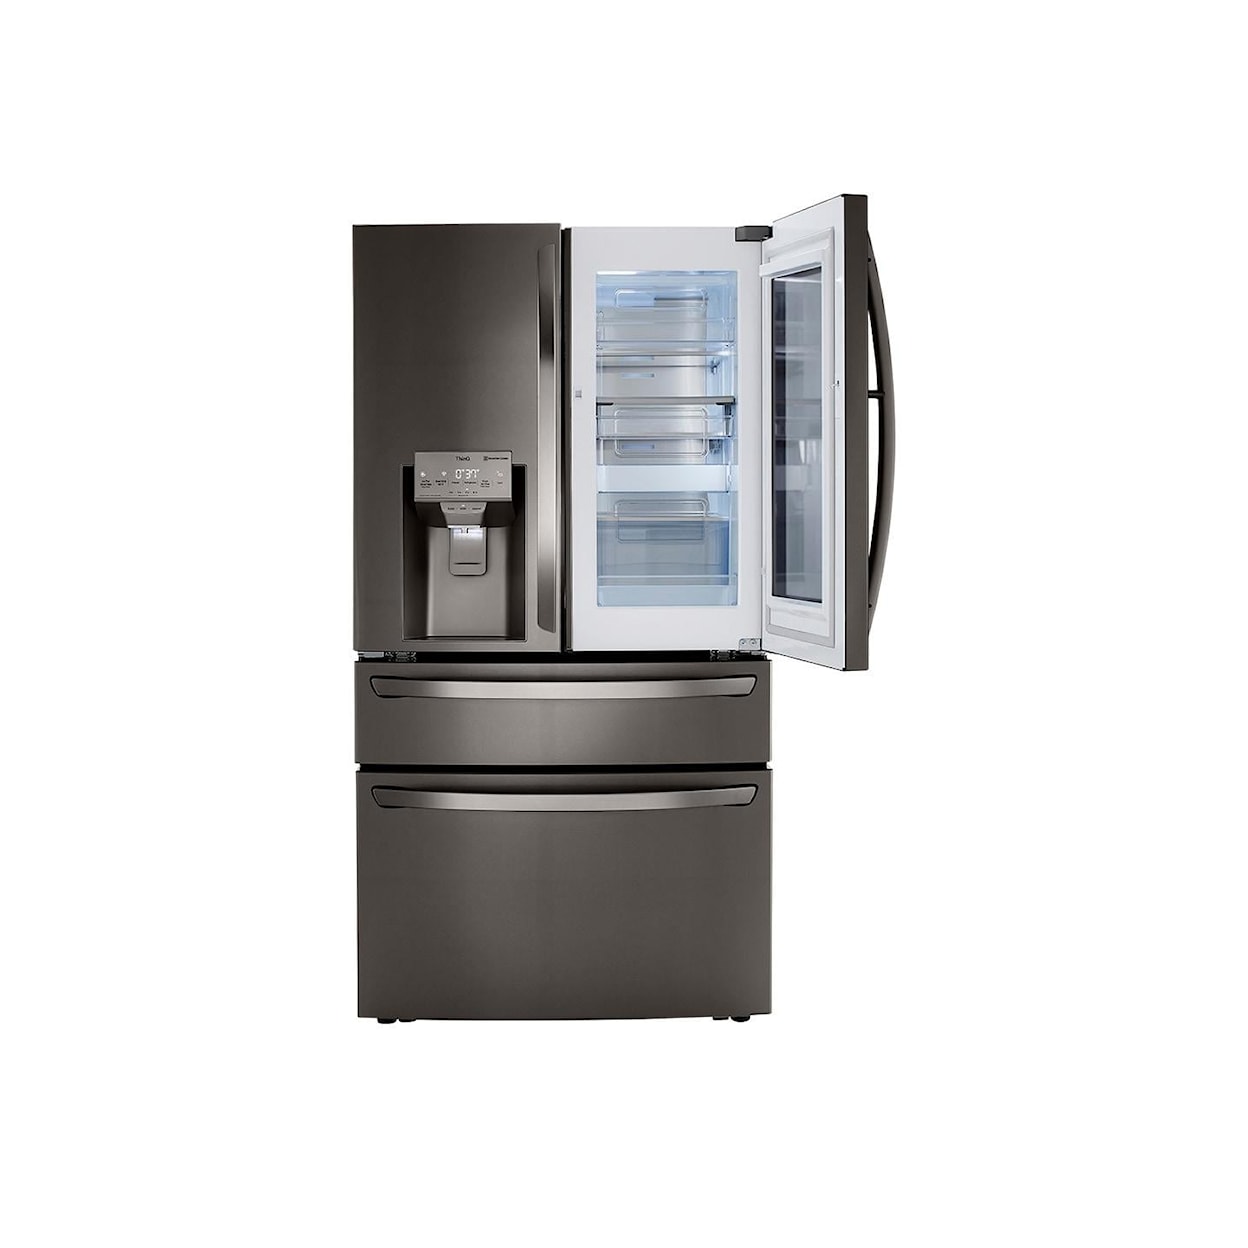 LG Appliances Refrigerators Glass Door Freestanding Refrigerator